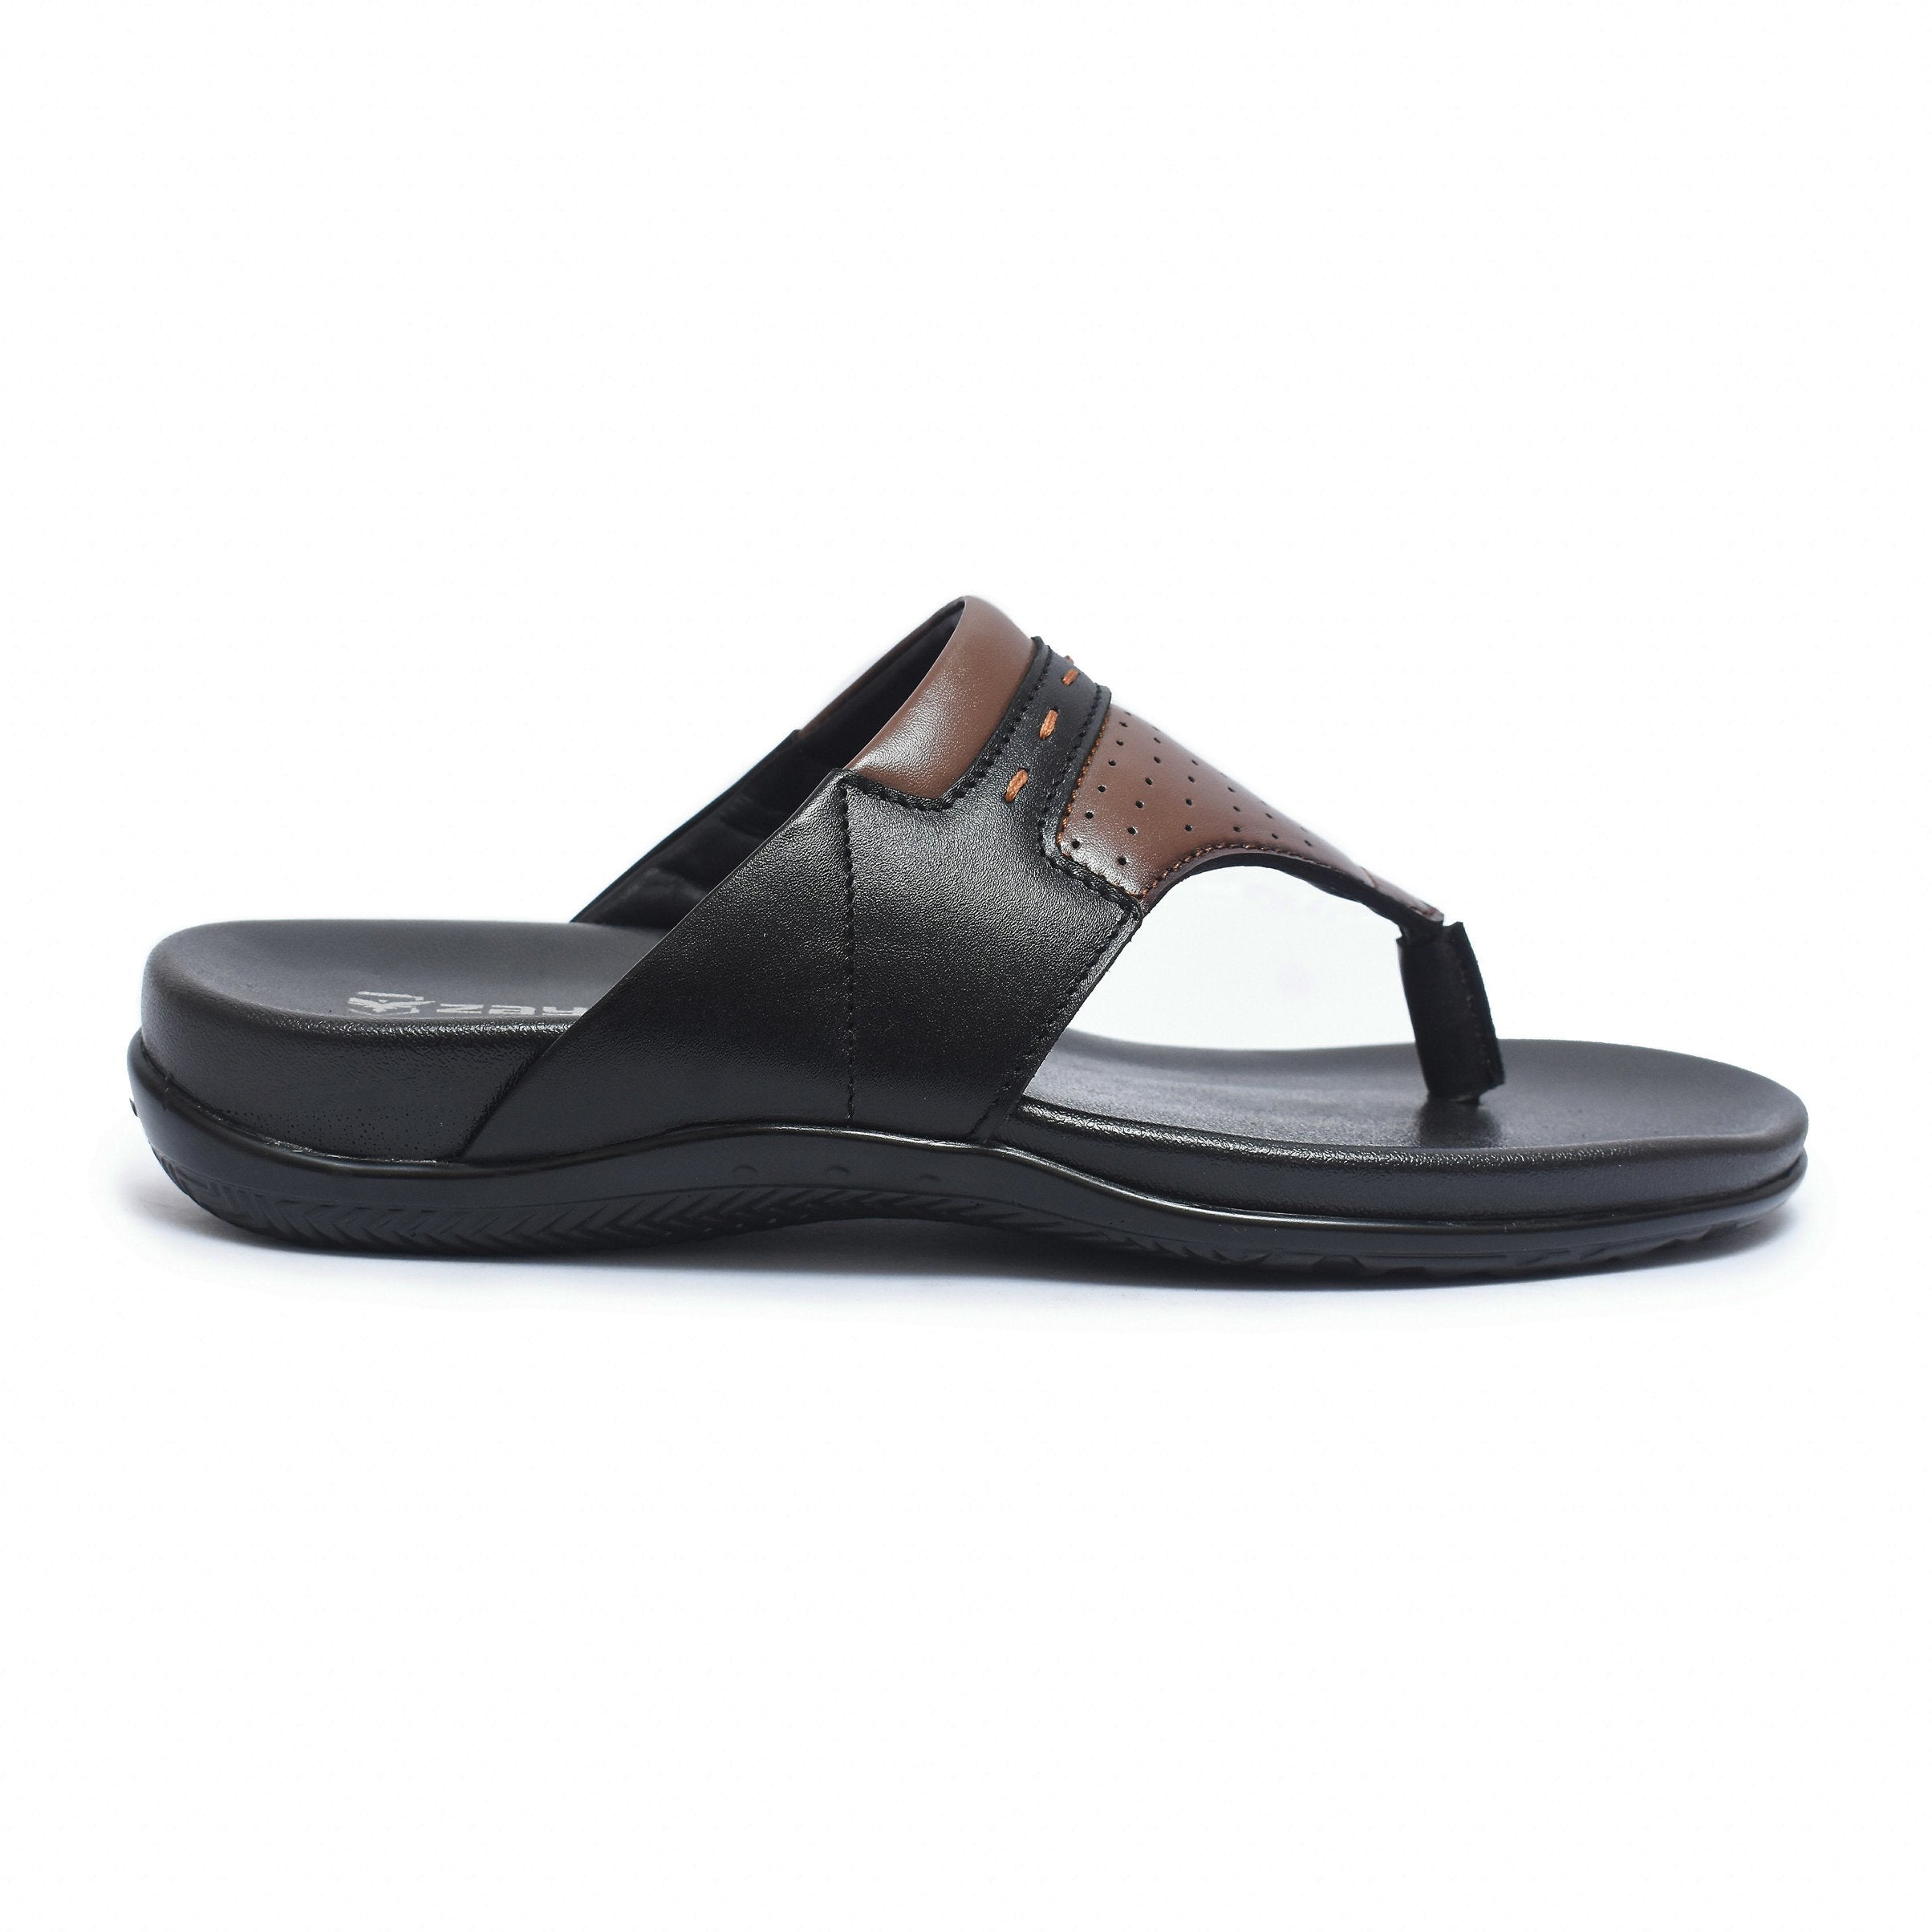 Zays Premium Leather Sandal For Men (Black) - ZAYS-A-78